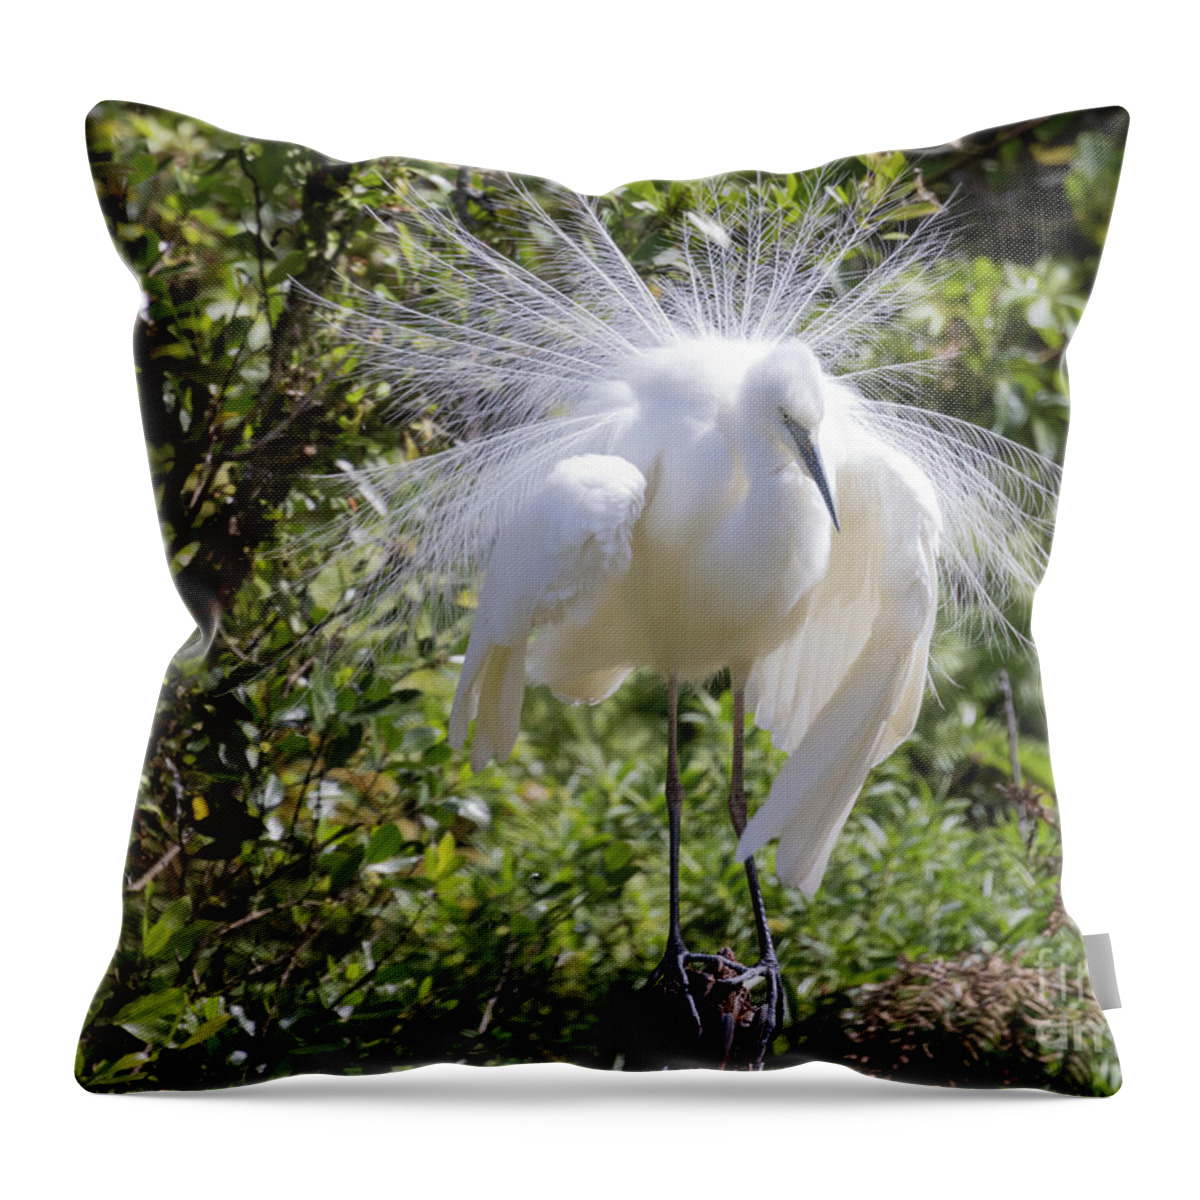 White Heron Throw Pillow featuring the photograph White Heron by Eva Lechner